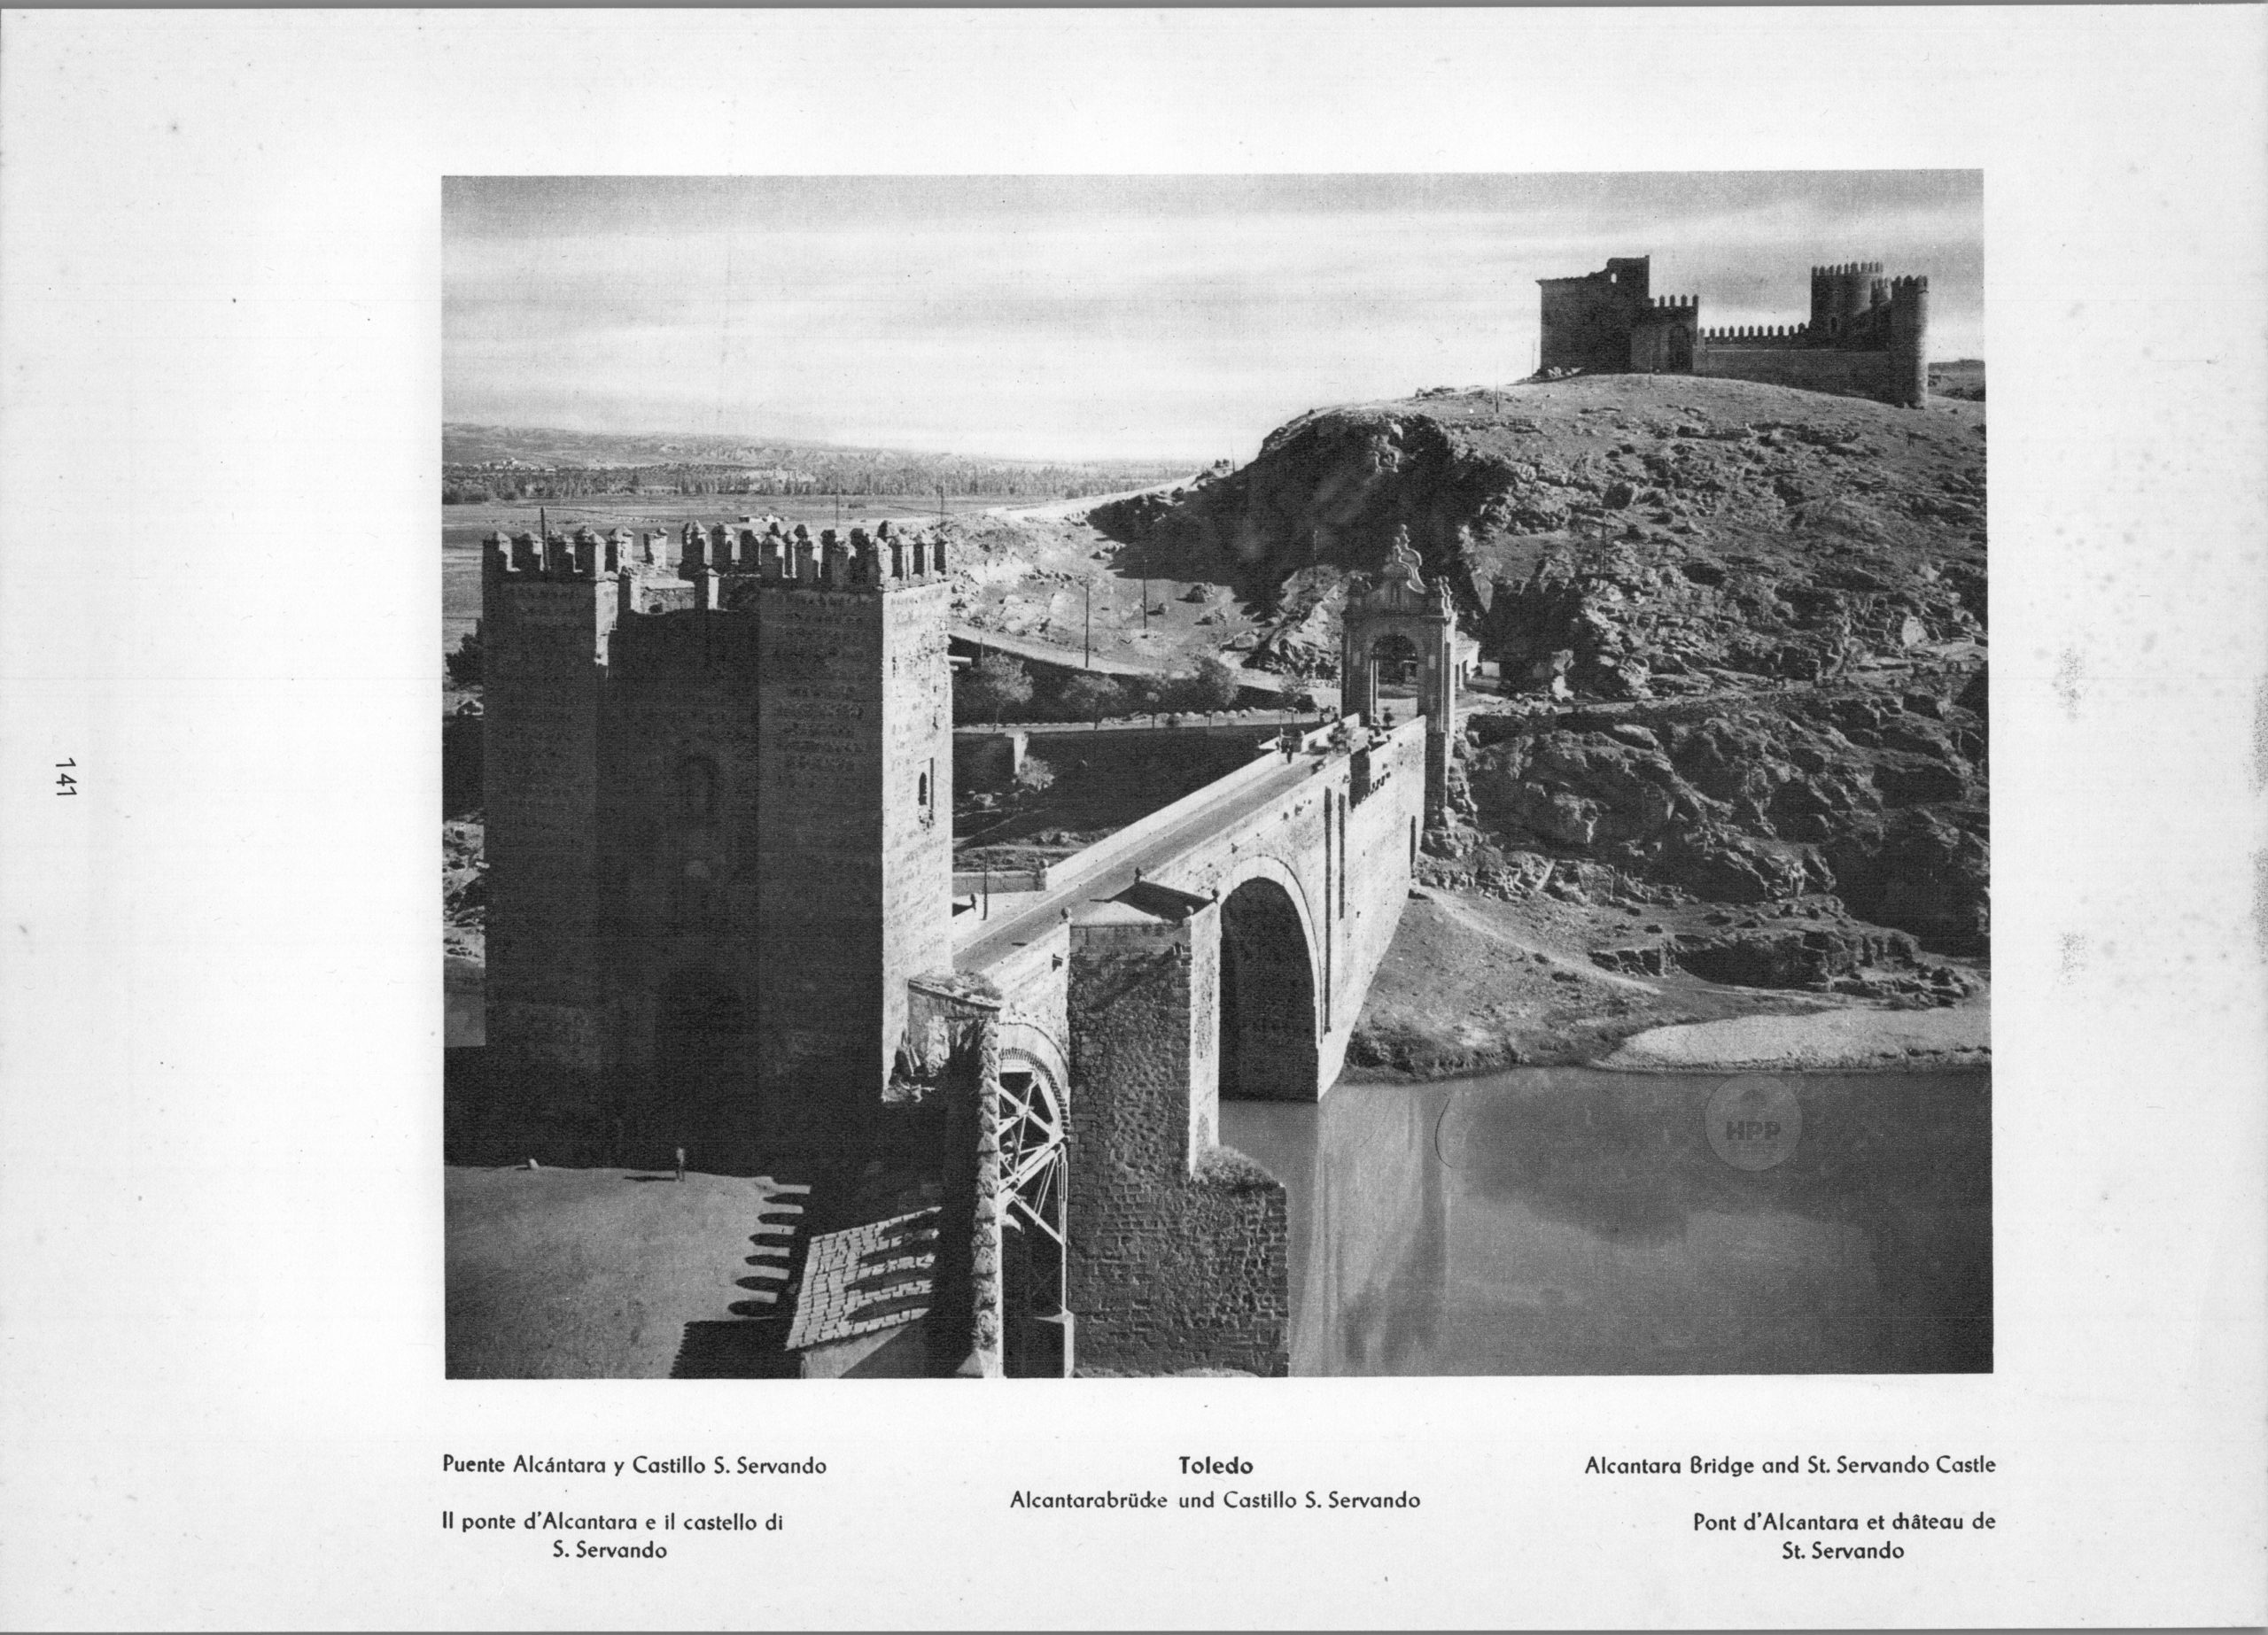 Toledo - Alcantara Bridge and St. Servando Castle